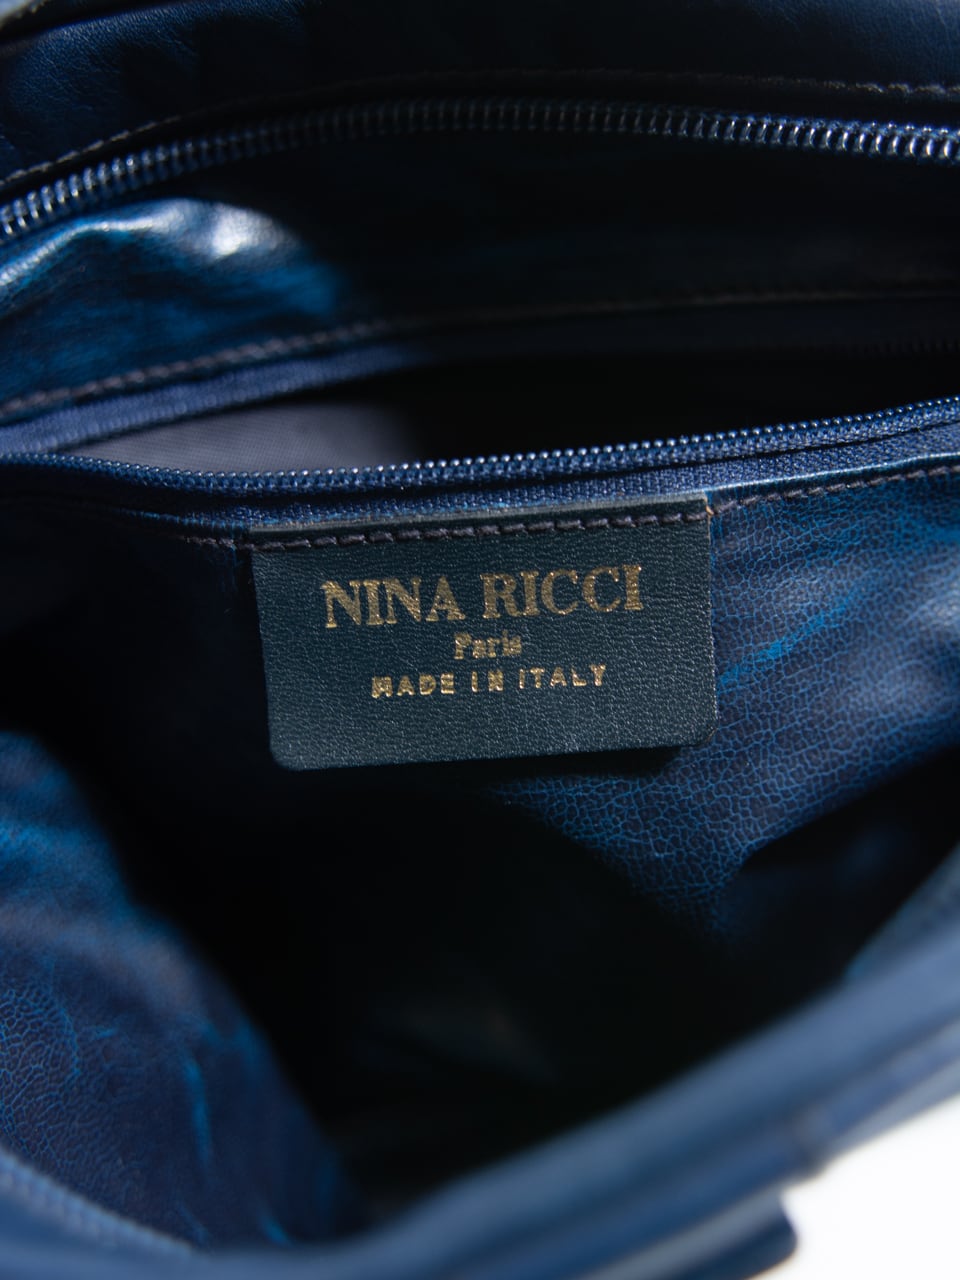 NINA RICCI PARIS】Made in Italy leather crossbody bag（ニナリッチ